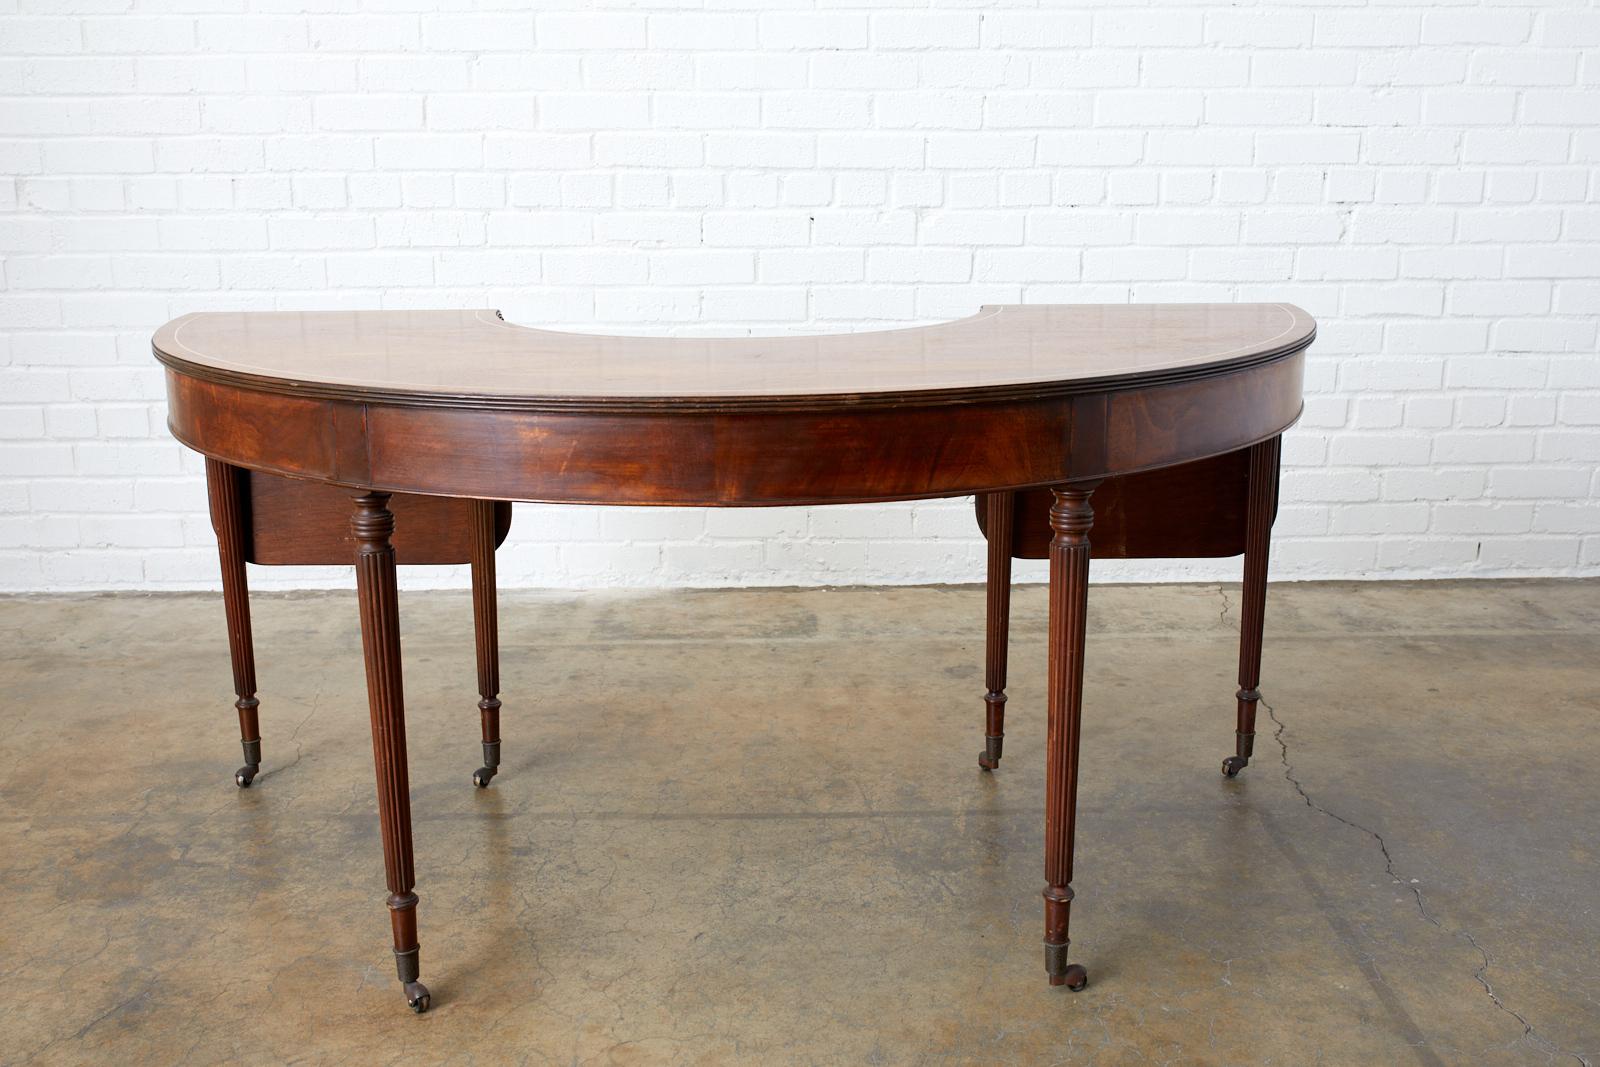 20th Century English Regency Style Drop-Leaf Hunt Table or Desk